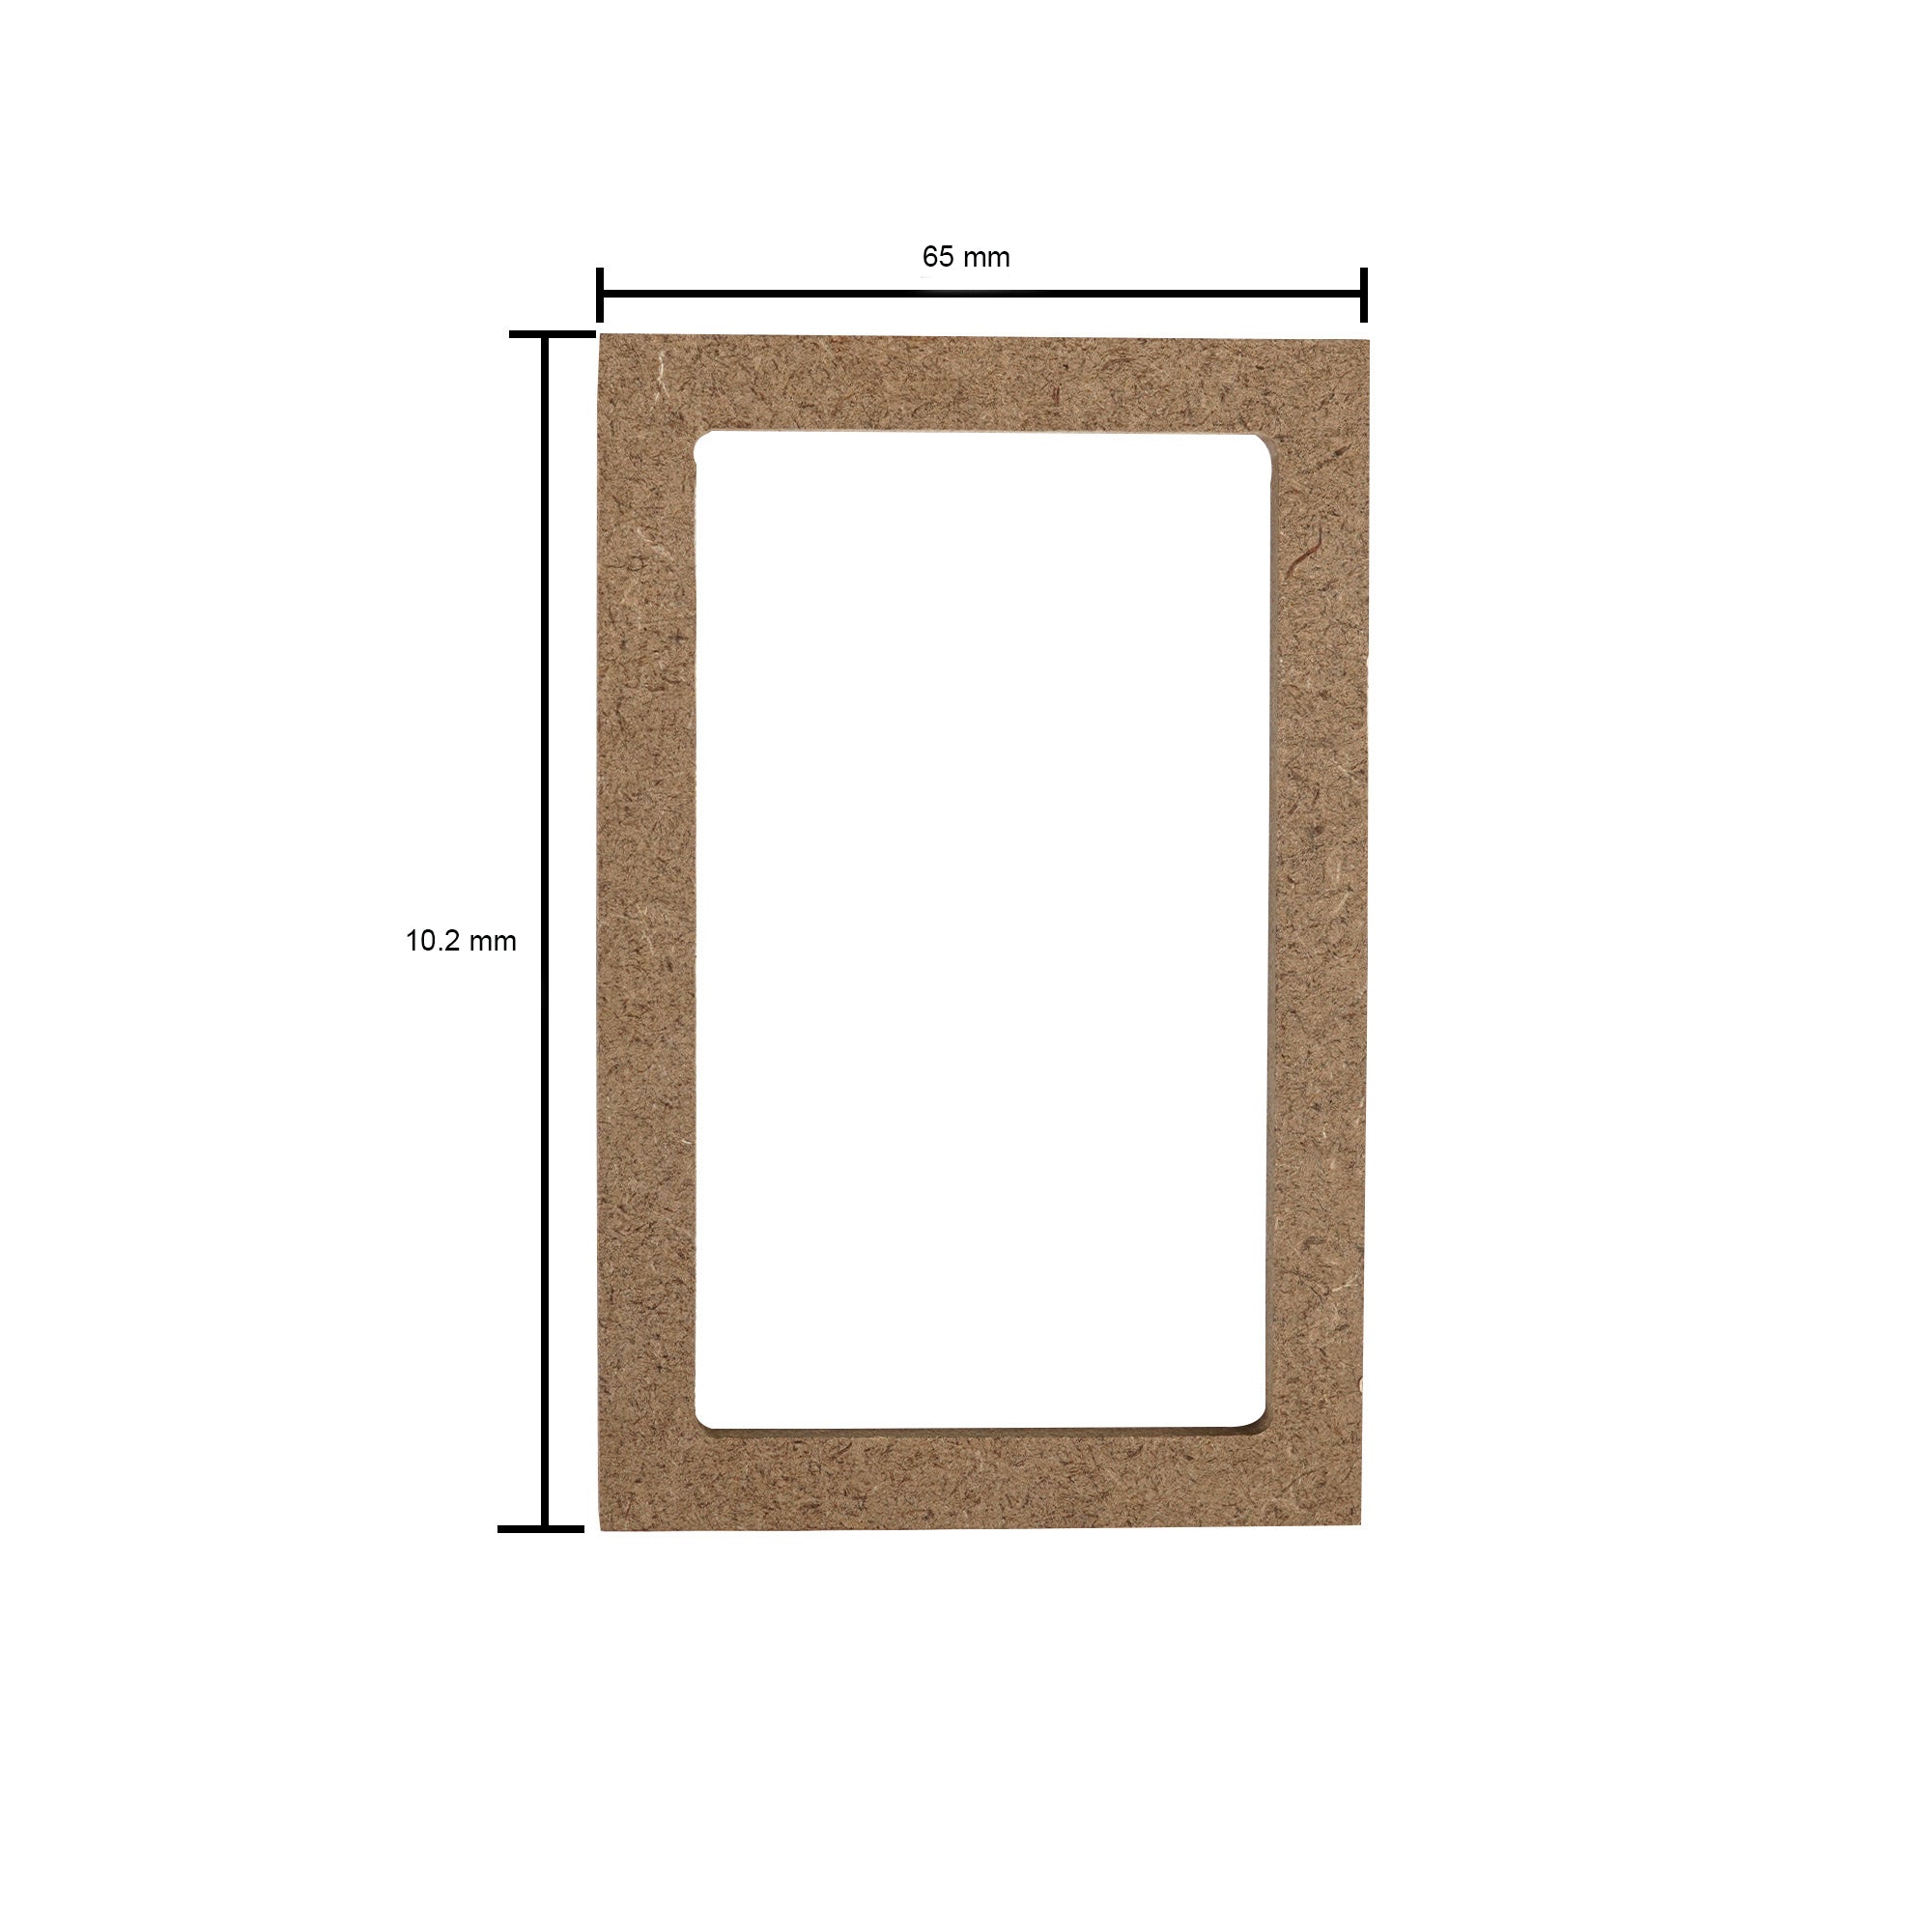 Build A Home Box Chajja For 4 Door Window W102.4 X H66 mm 1pc